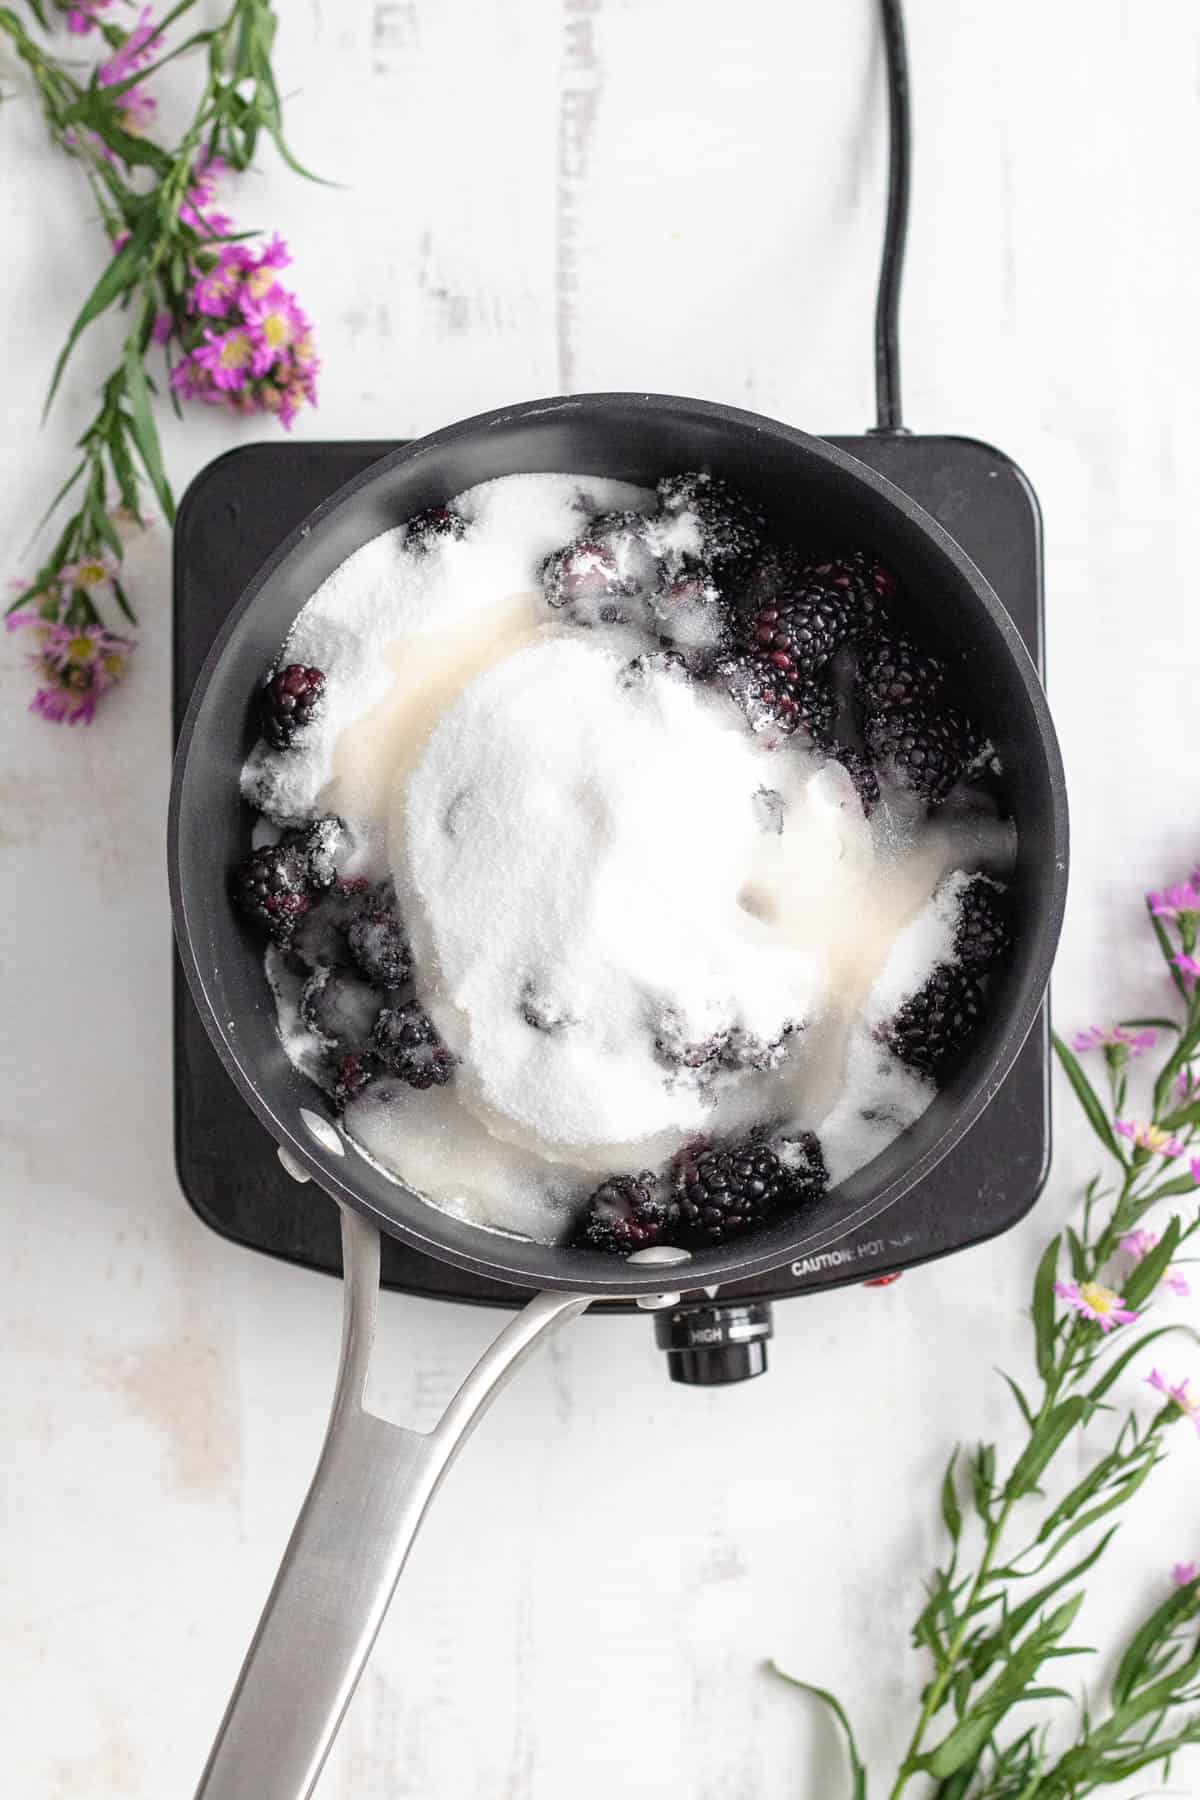 blackberries, granulated sugar, and lemon juice in a medium-sized saucepan